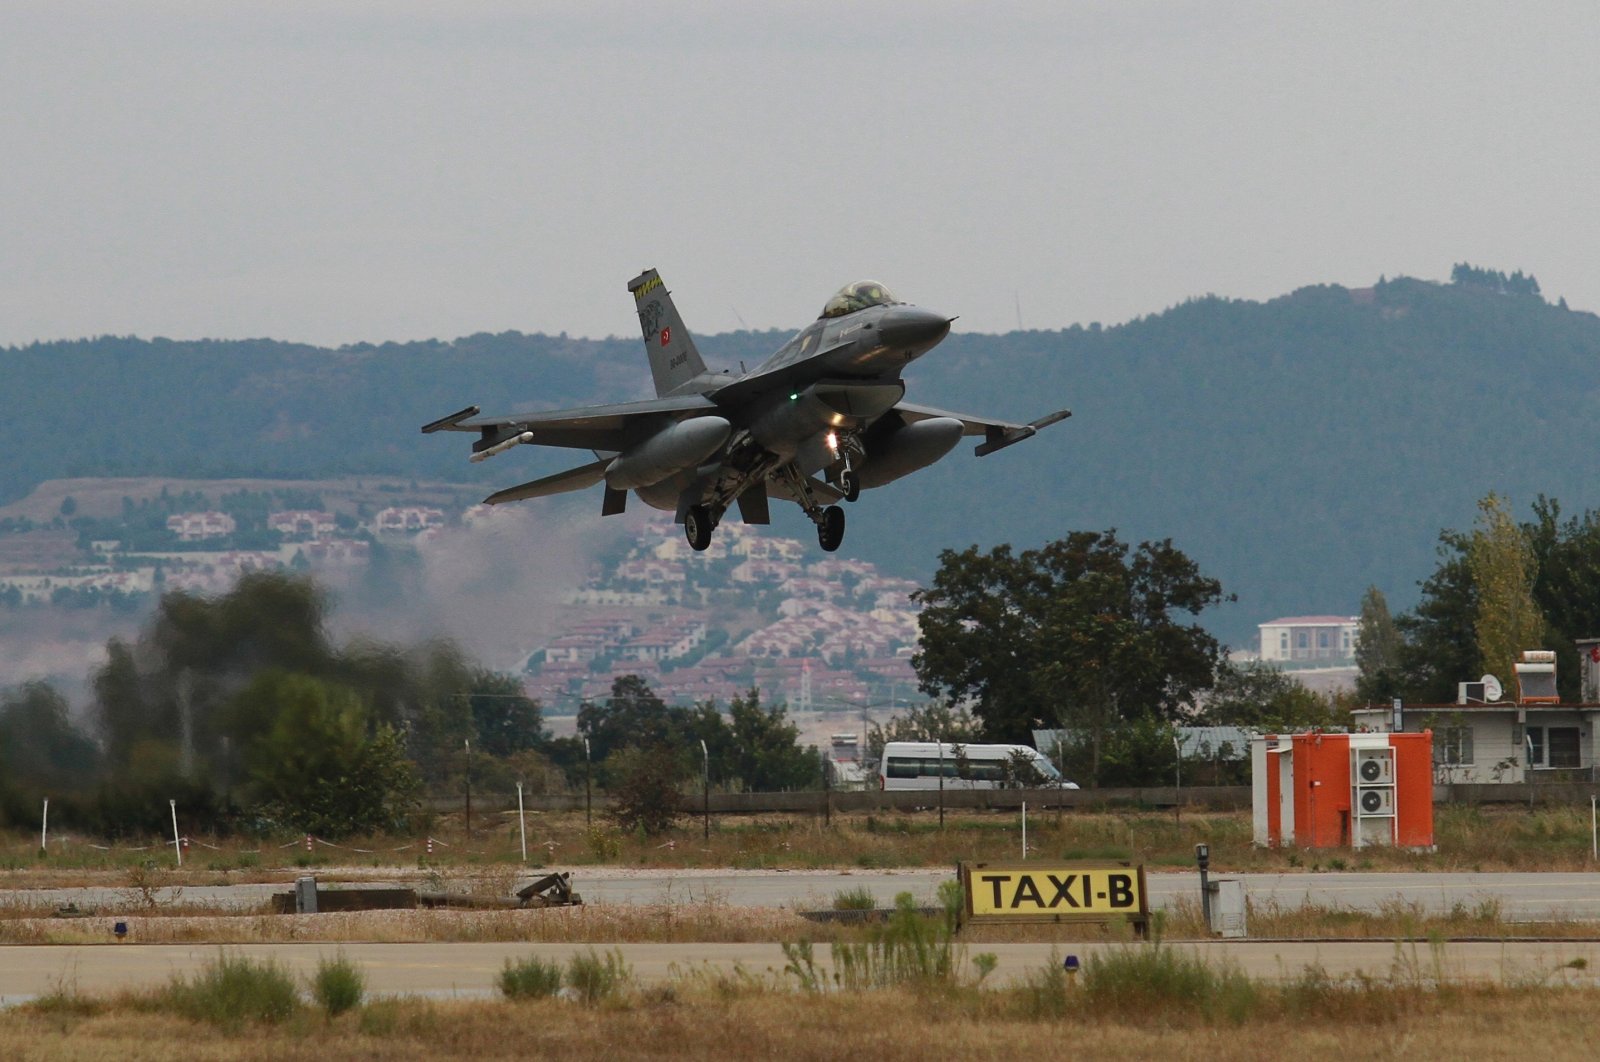 An F-16 warplane is seen during takeoff. (IHA Photo)